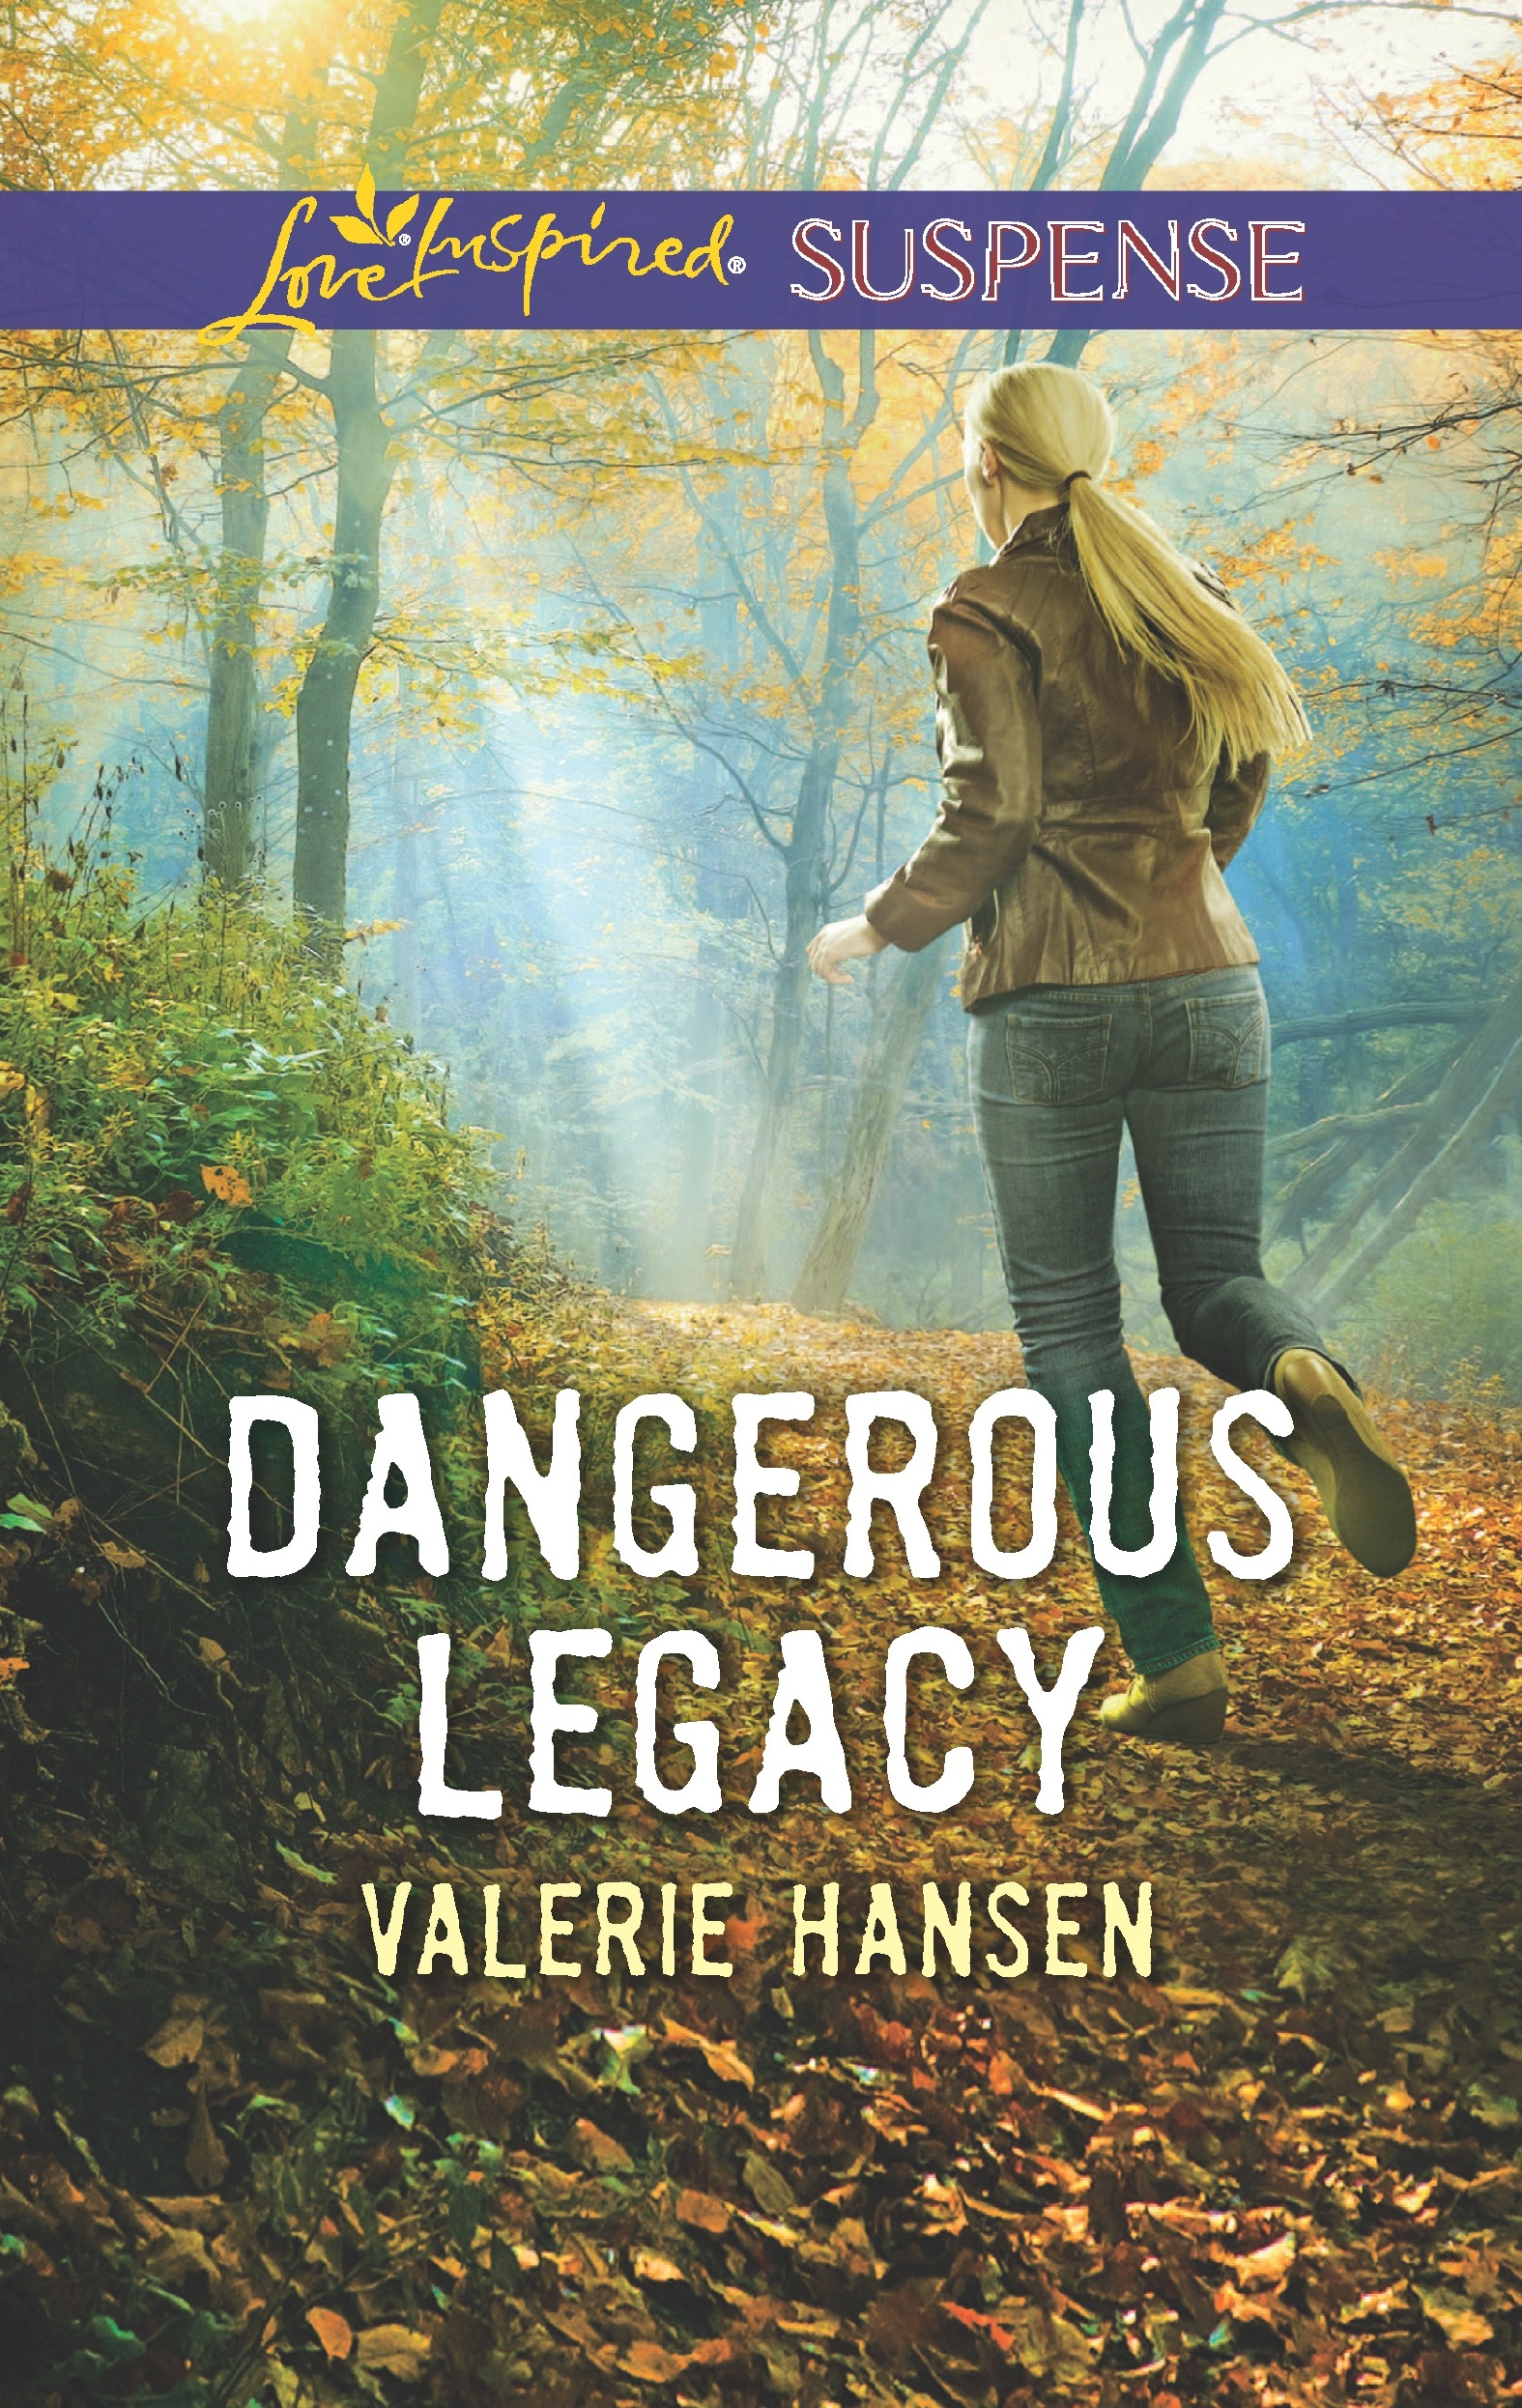 Dangerous Legacy (2016) by Valerie Hansen